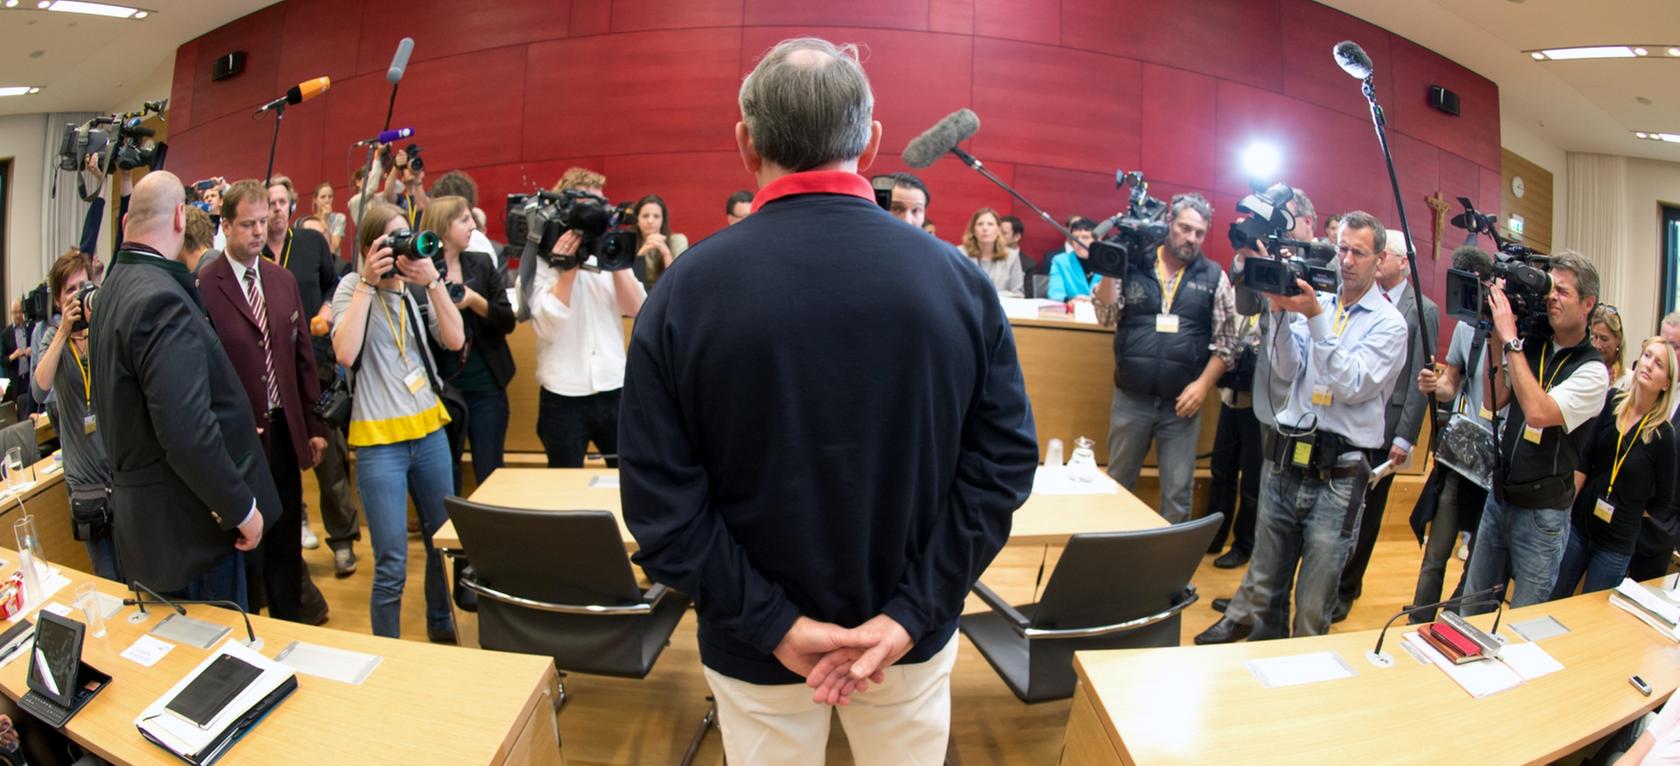 Fall Mollath: SPD-Fraktionsvize Aures sieht Justizversagen